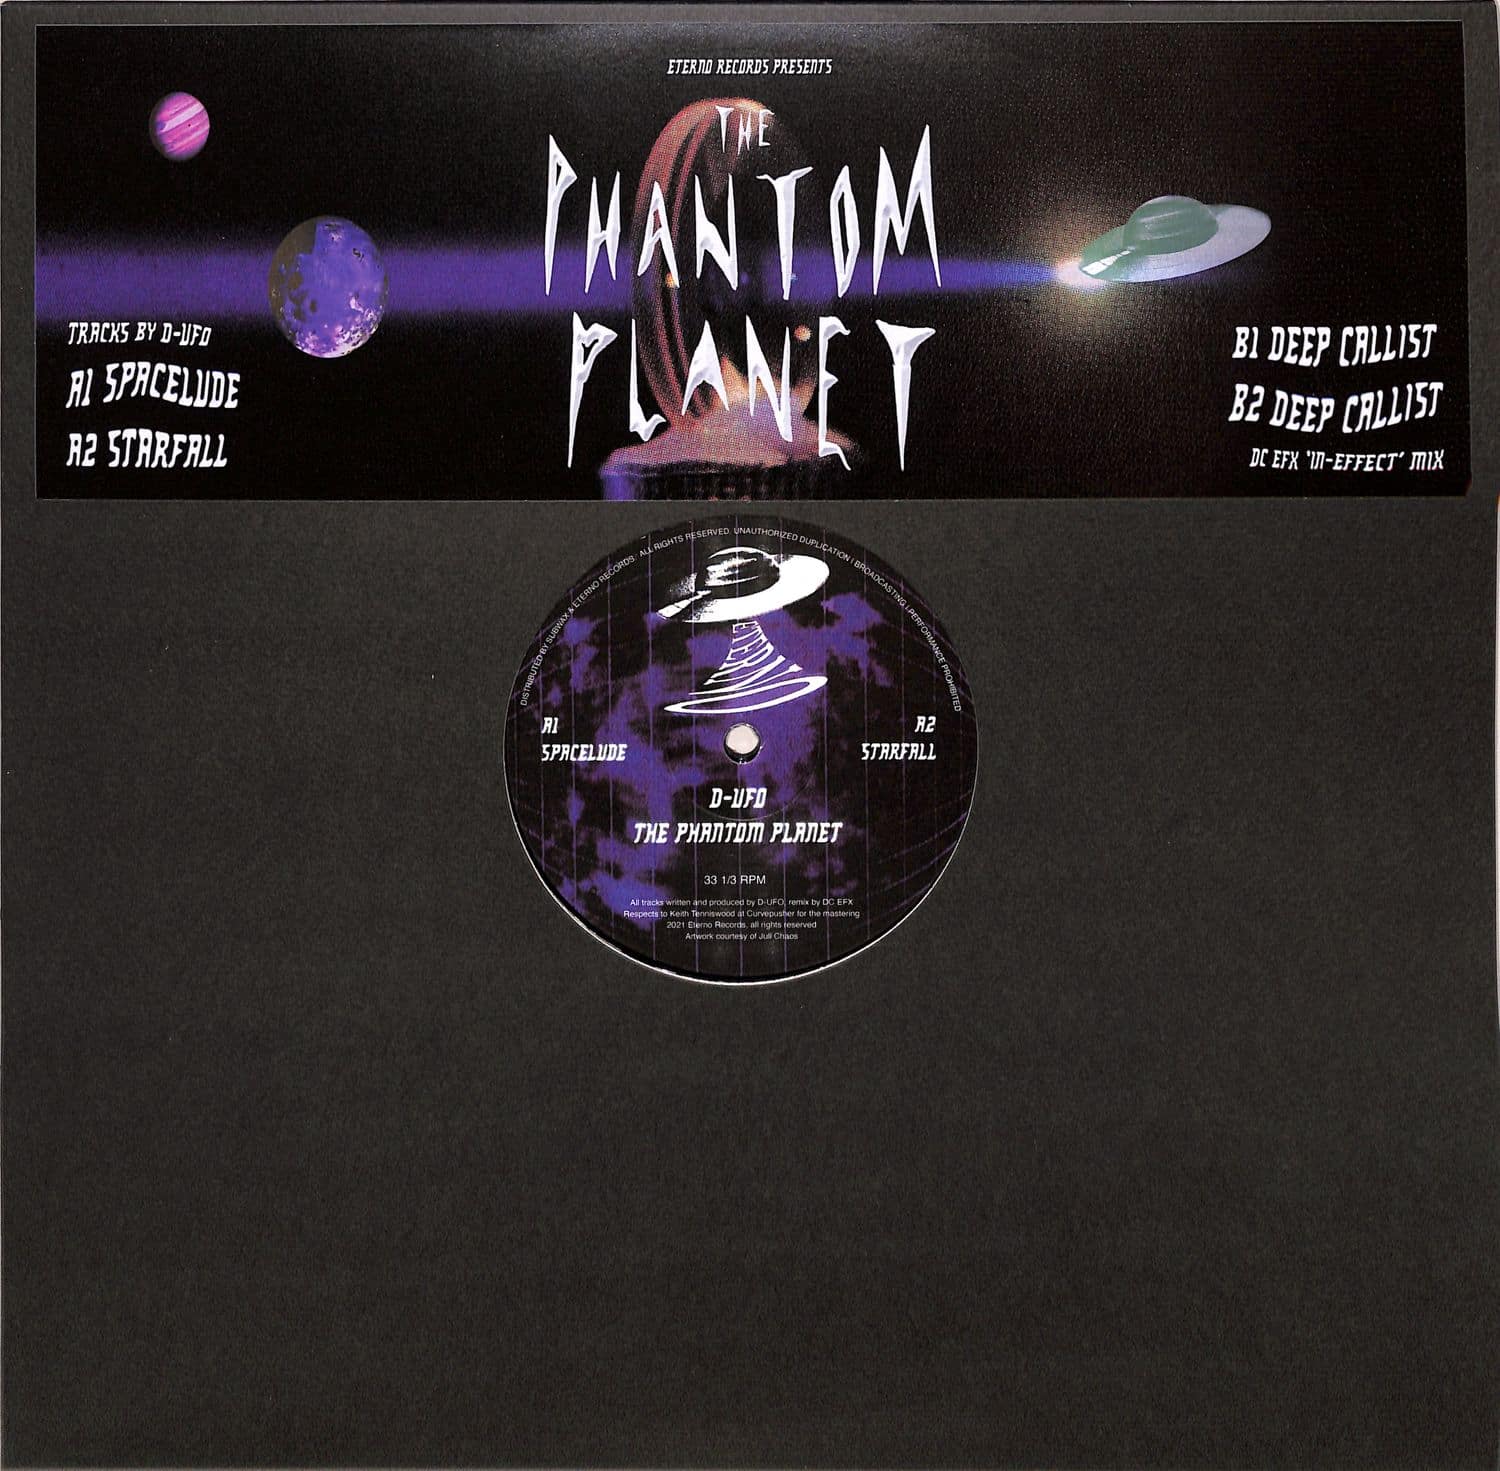 D-UFO - THE PHANTOM PLANET EP